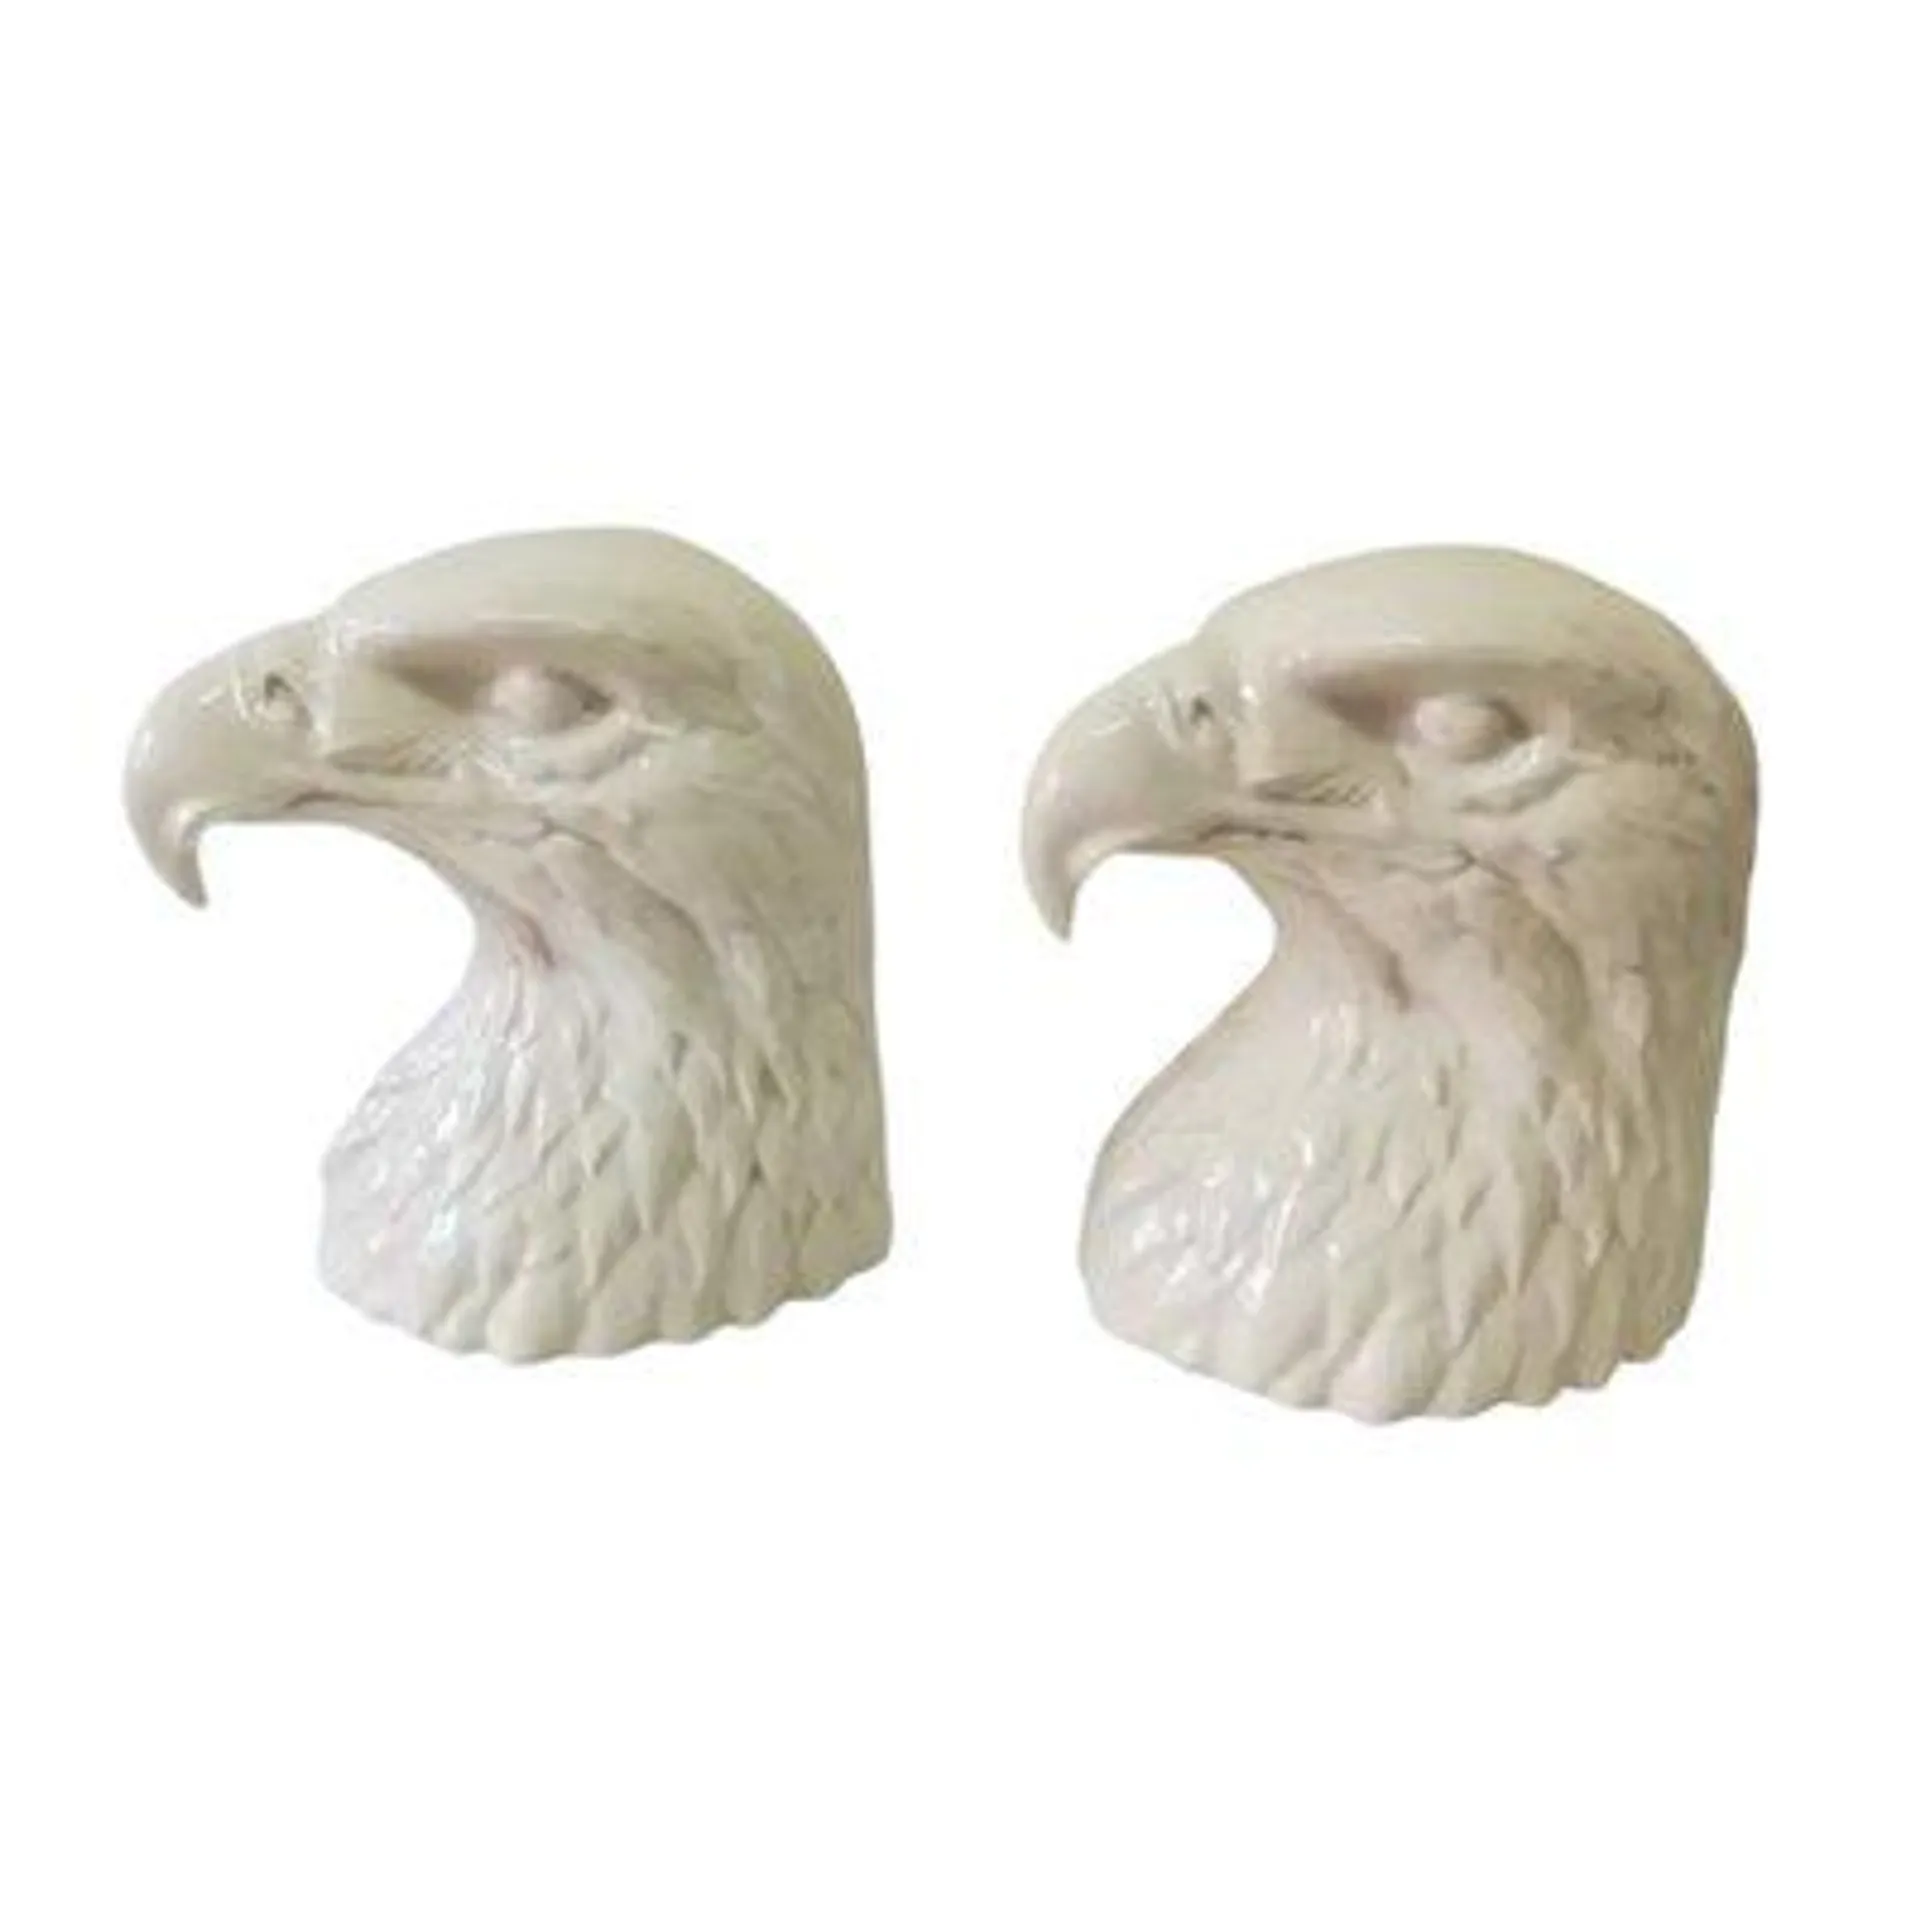 Vintage Spanish Sculptures of Eagles on White Ceramic by Hispania, 1980s, Set of 2